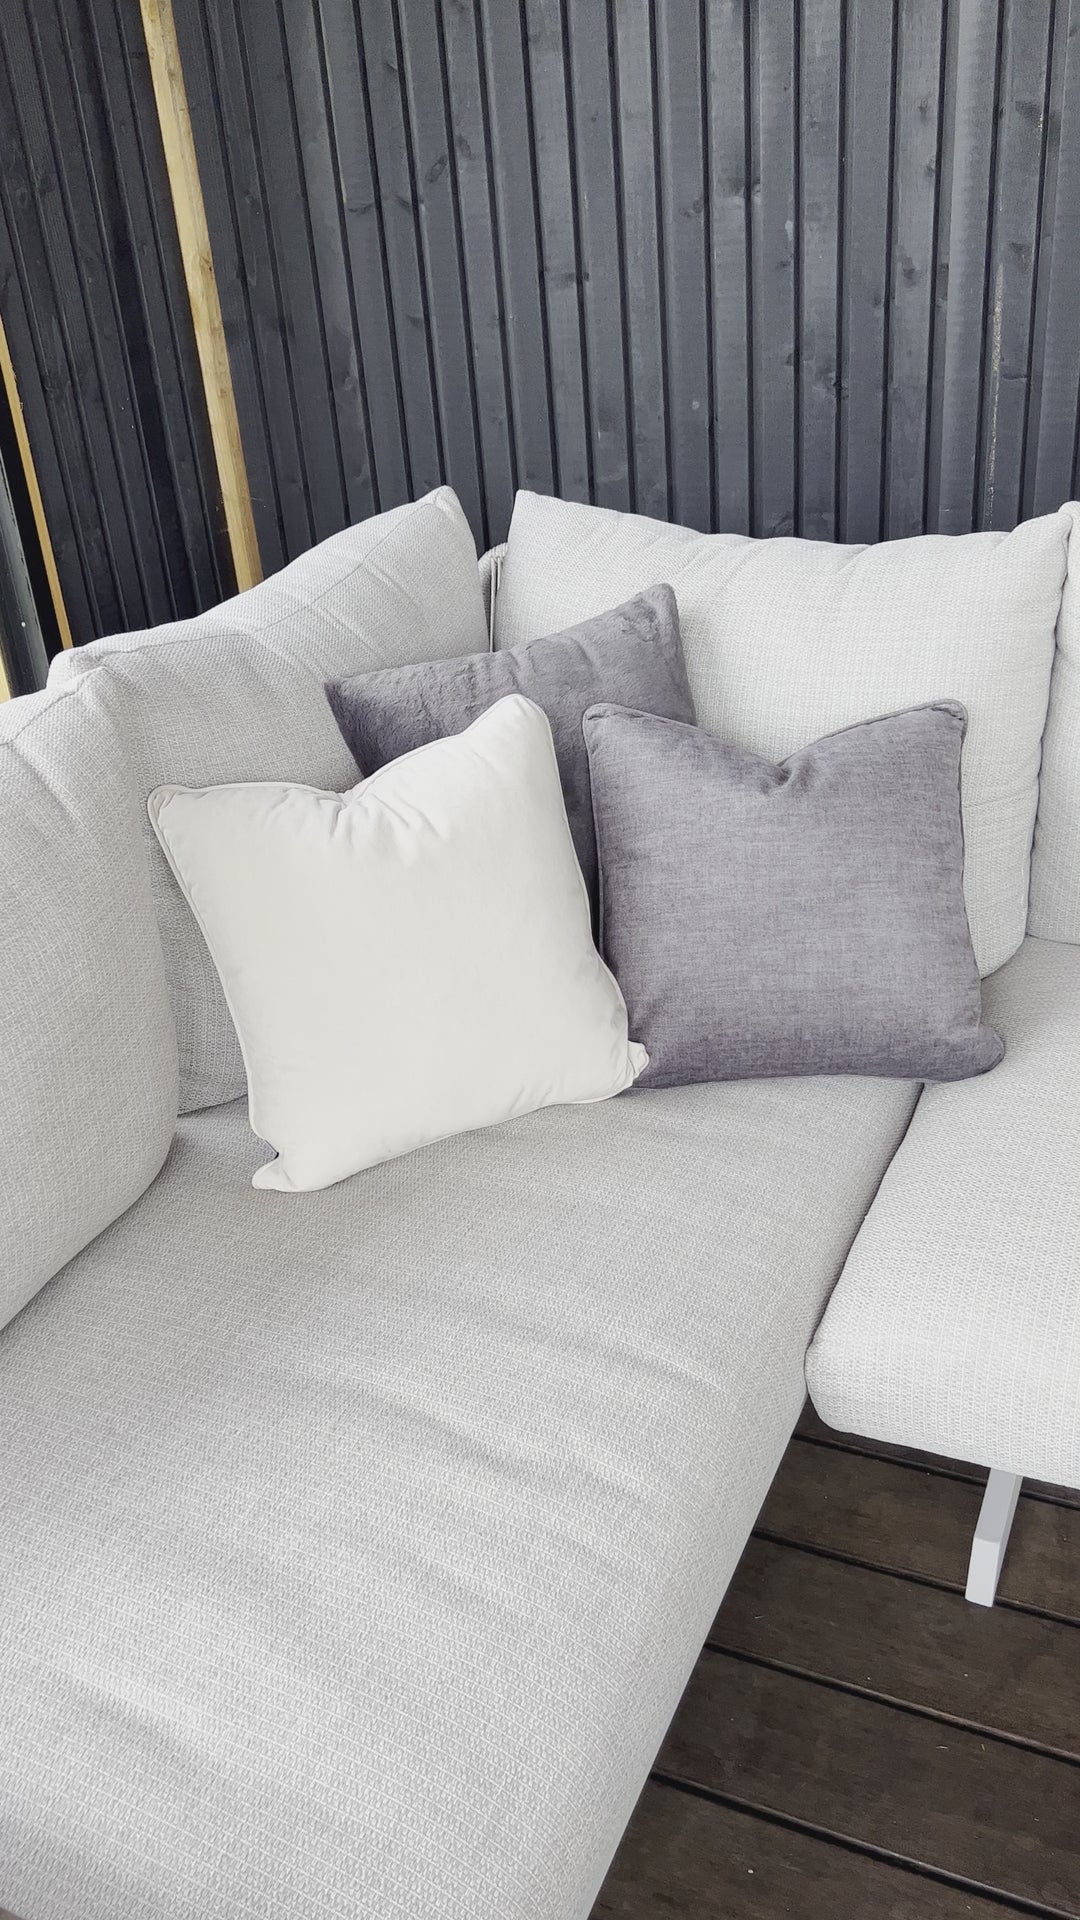 Decorative cushion set Italy - Natural/grey - set of 3 pieces